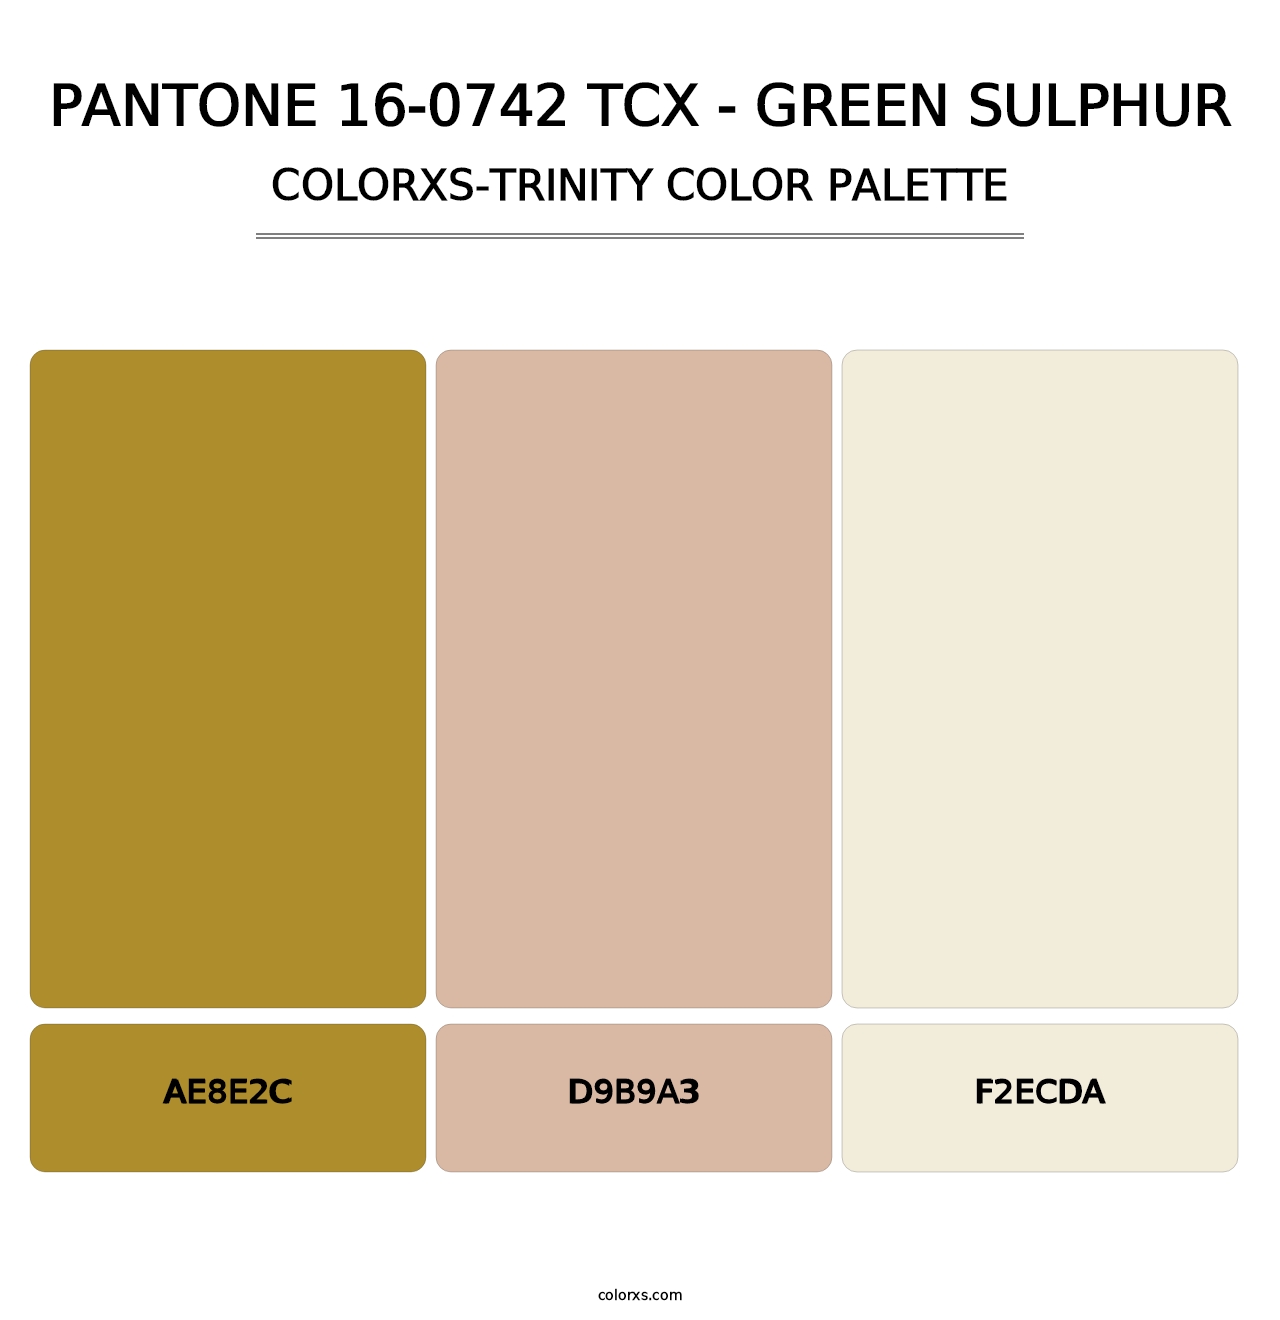 PANTONE 16-0742 TCX - Green Sulphur - Colorxs Trinity Palette